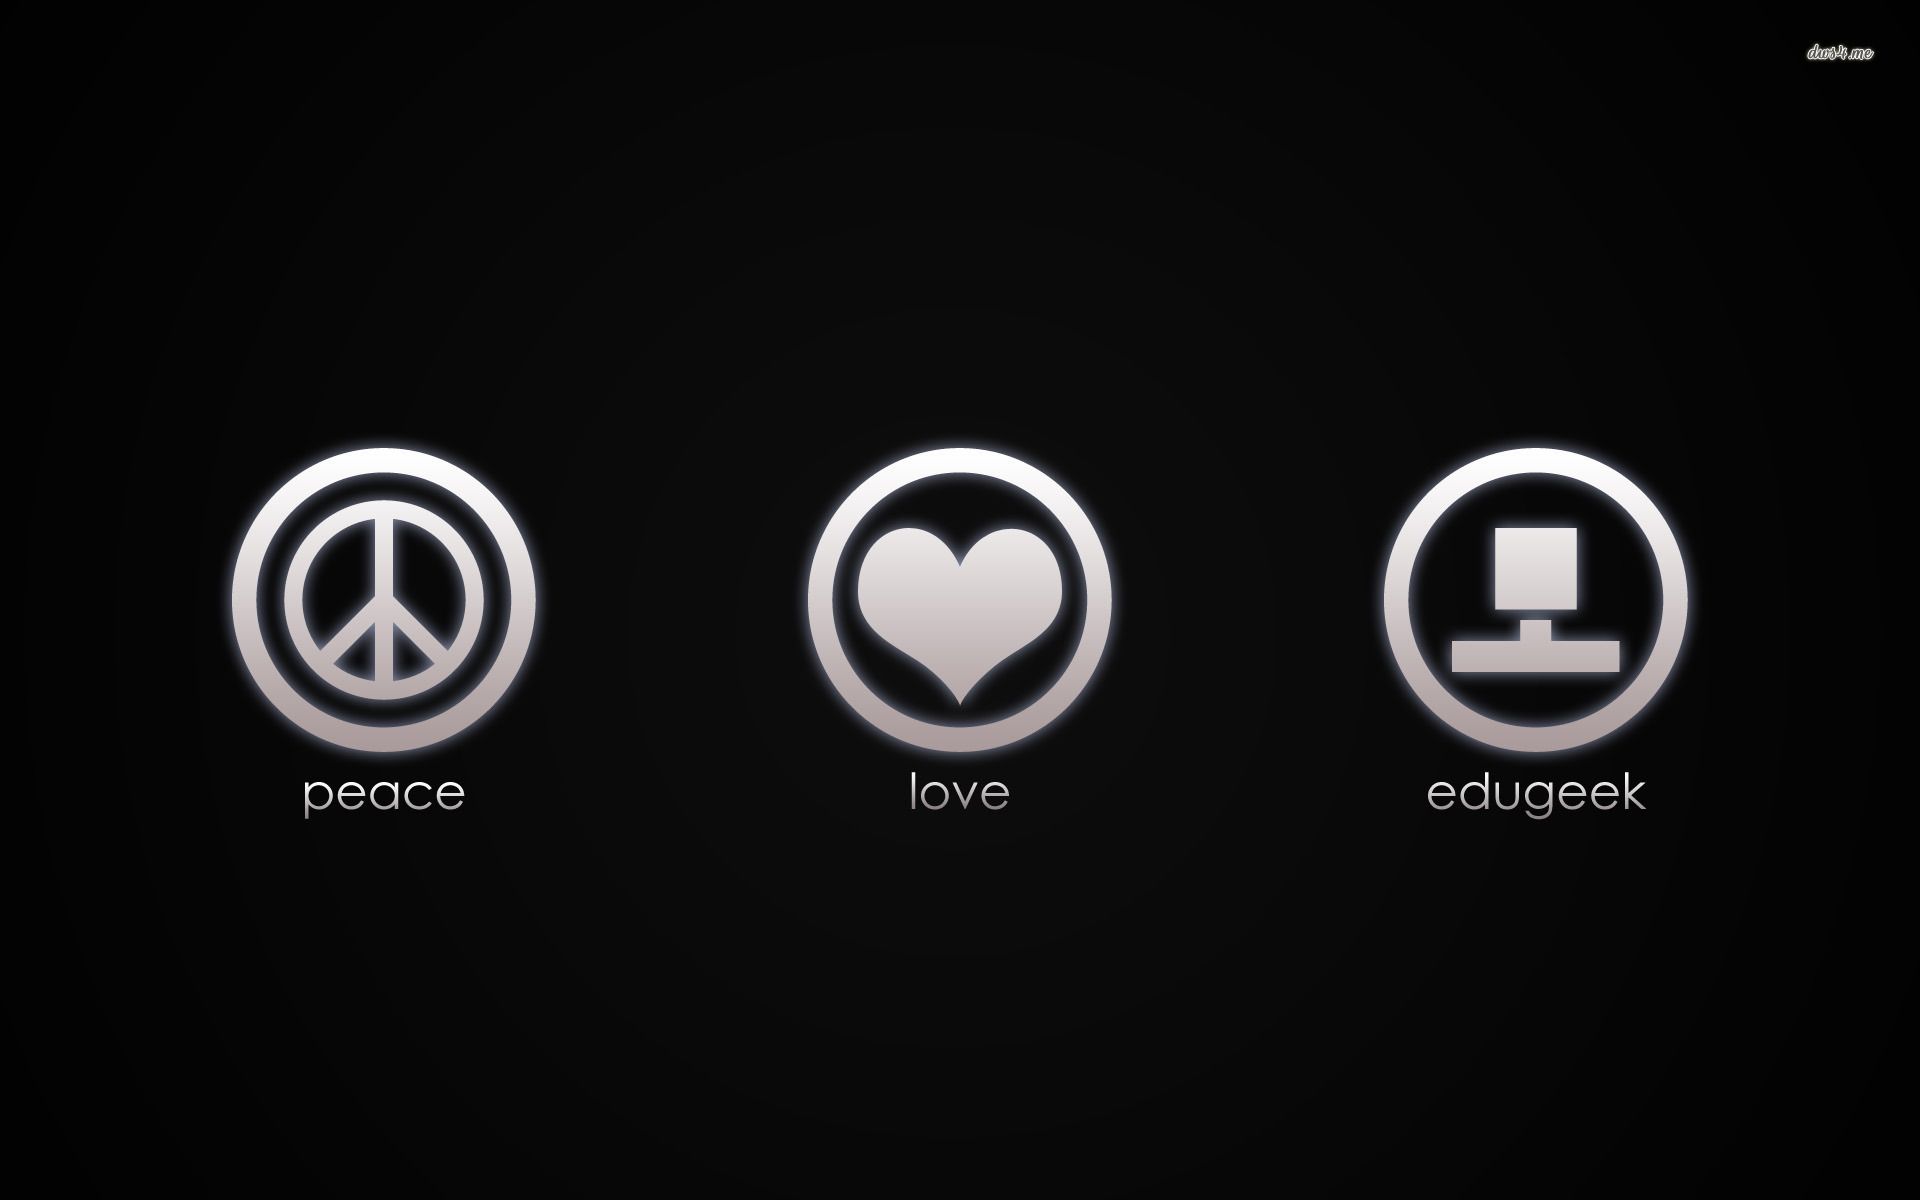 Peace, Love, Edugeek wallpaper - Digital Art wallpapers